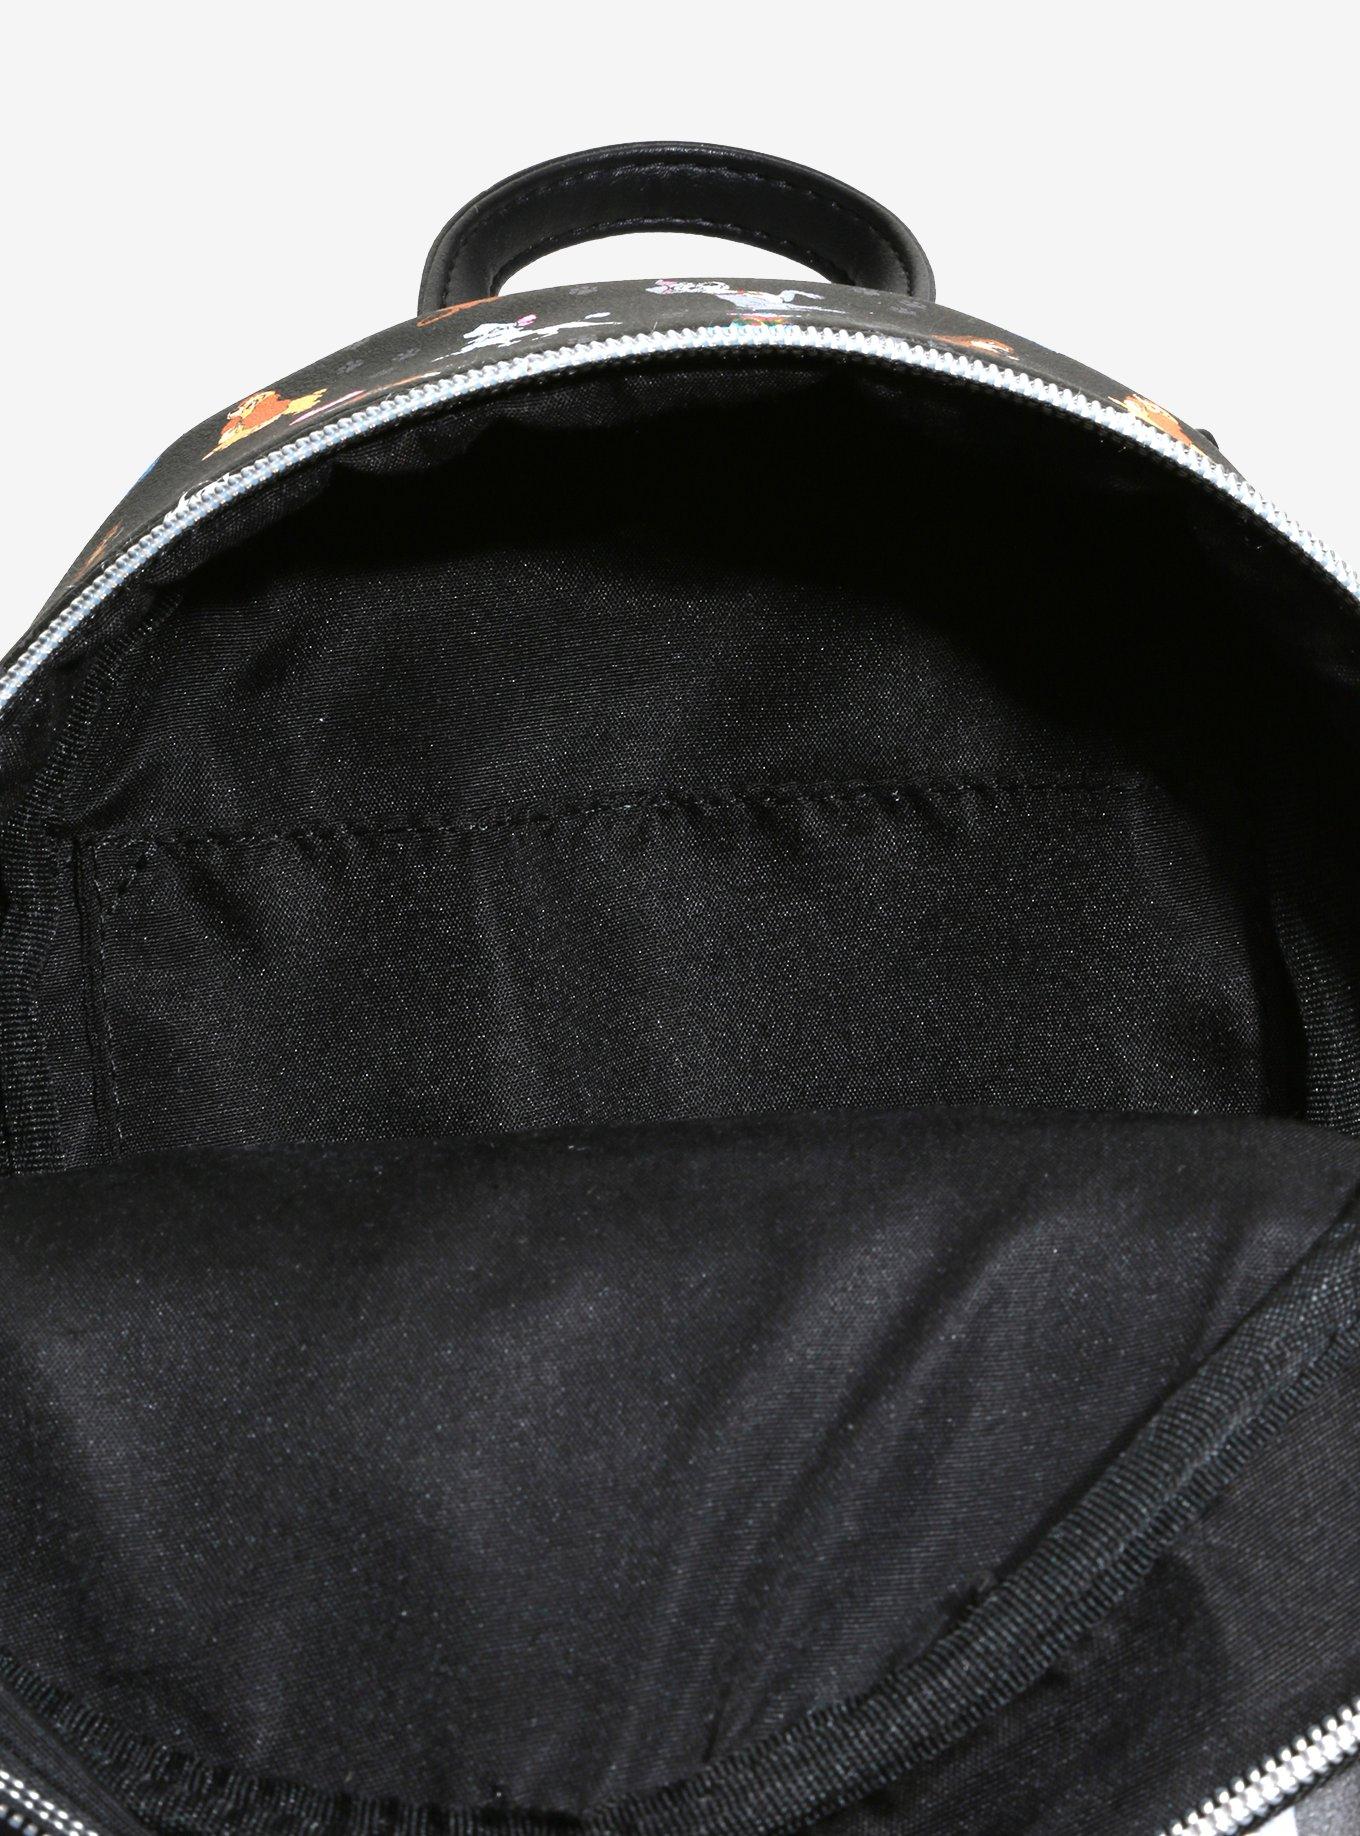 Loungefly Disney Dogs Mini Backpack, , alternate